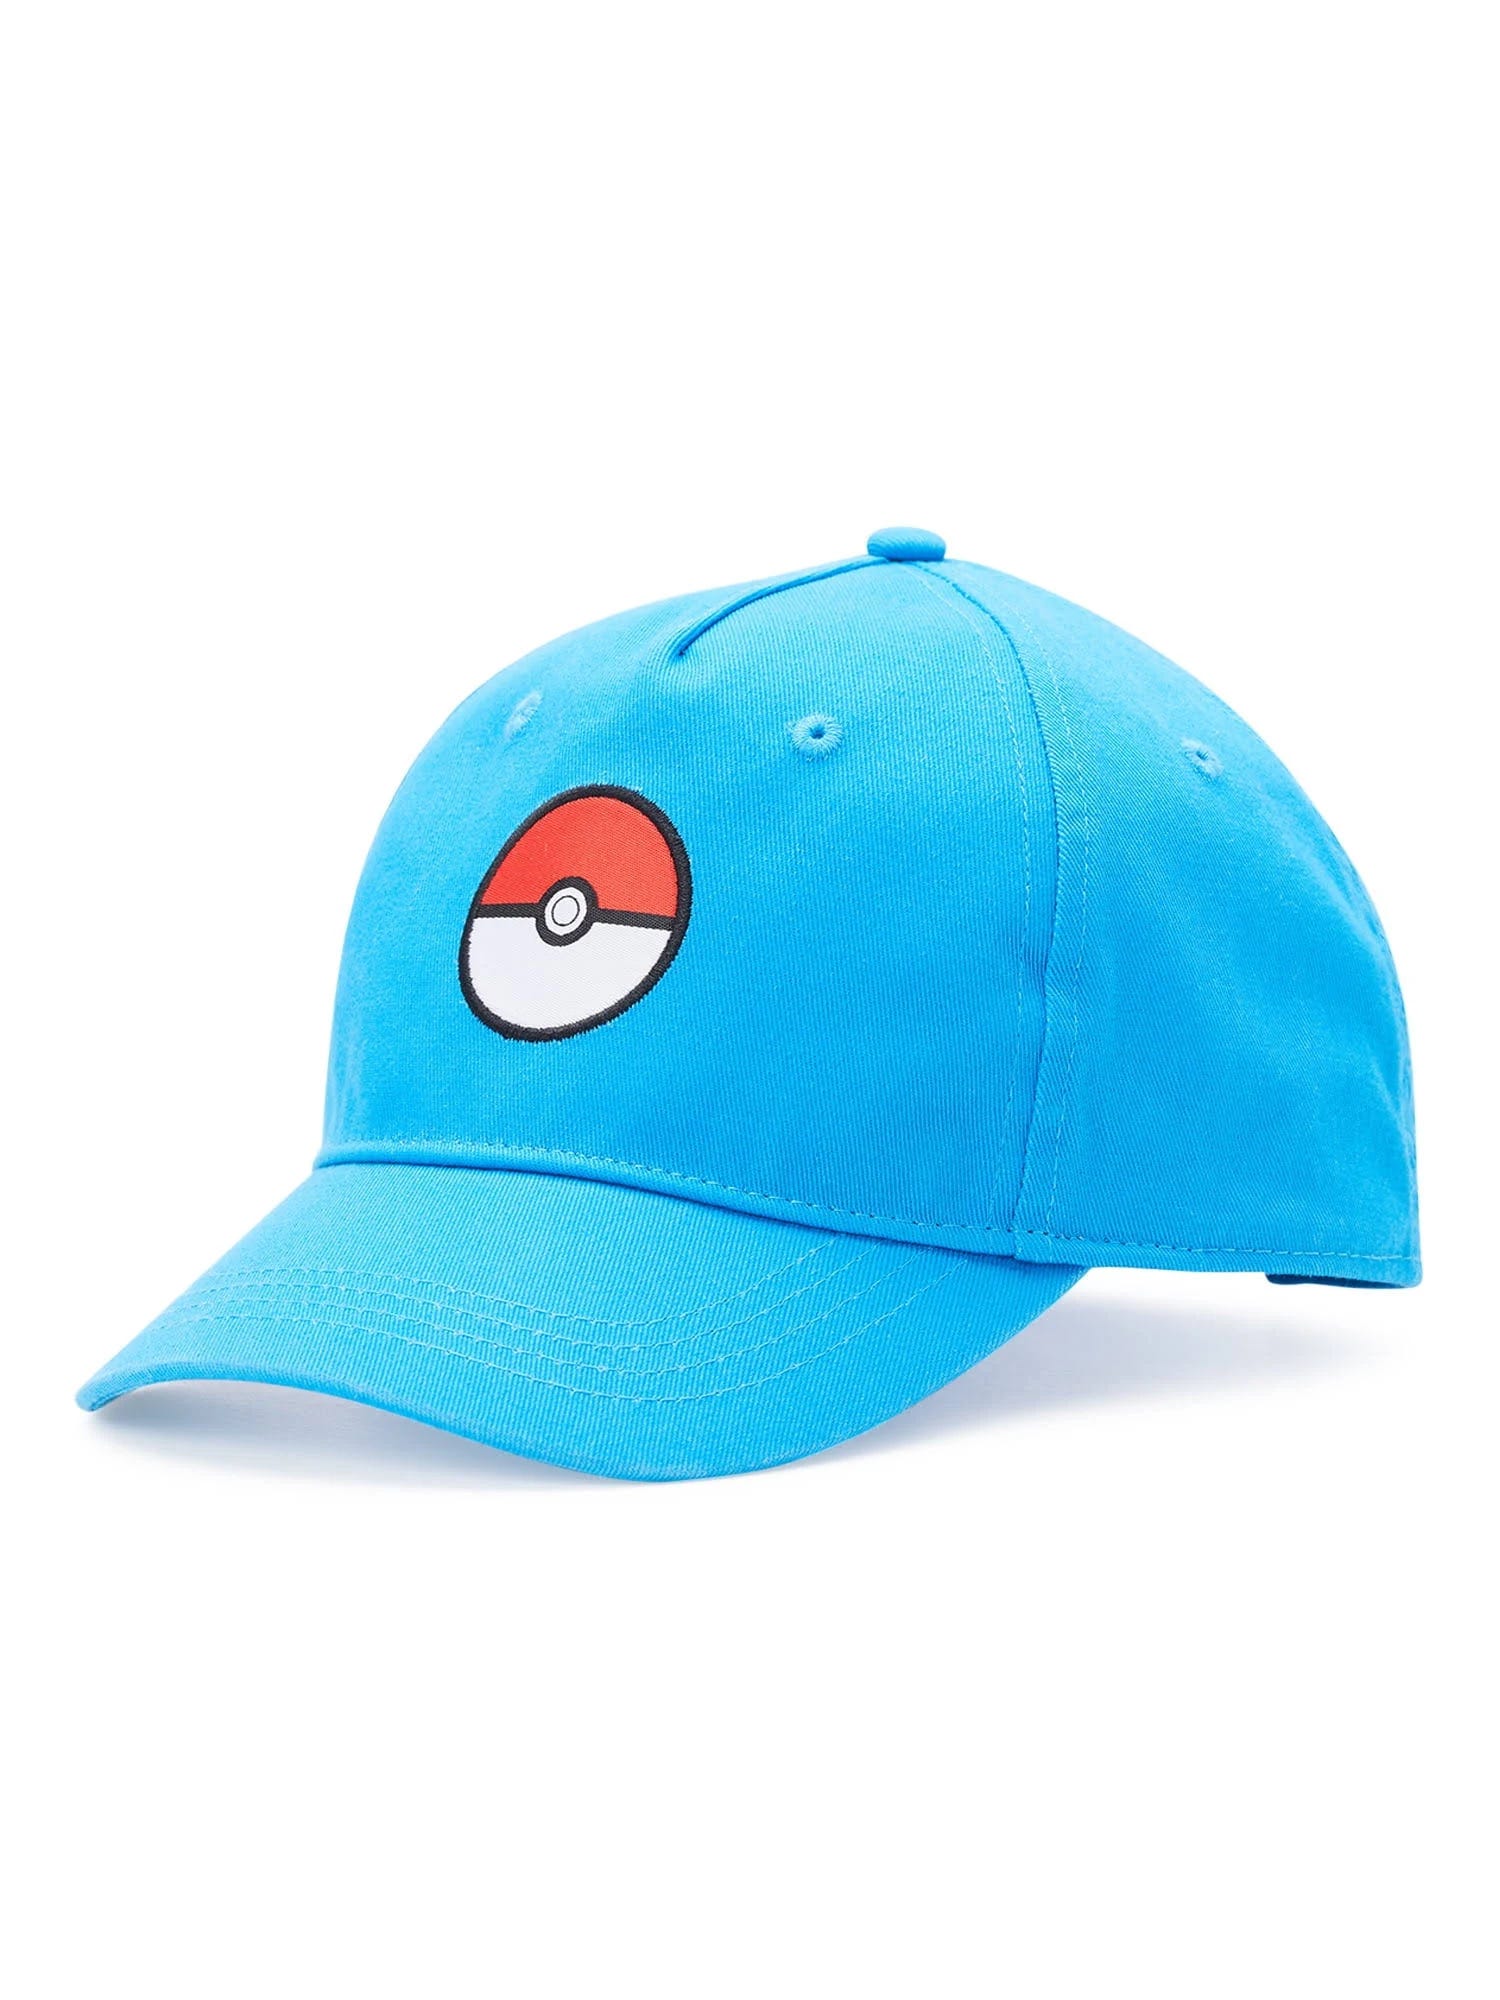 Pokemon-Inspired Snapback Hat for Boys | Image